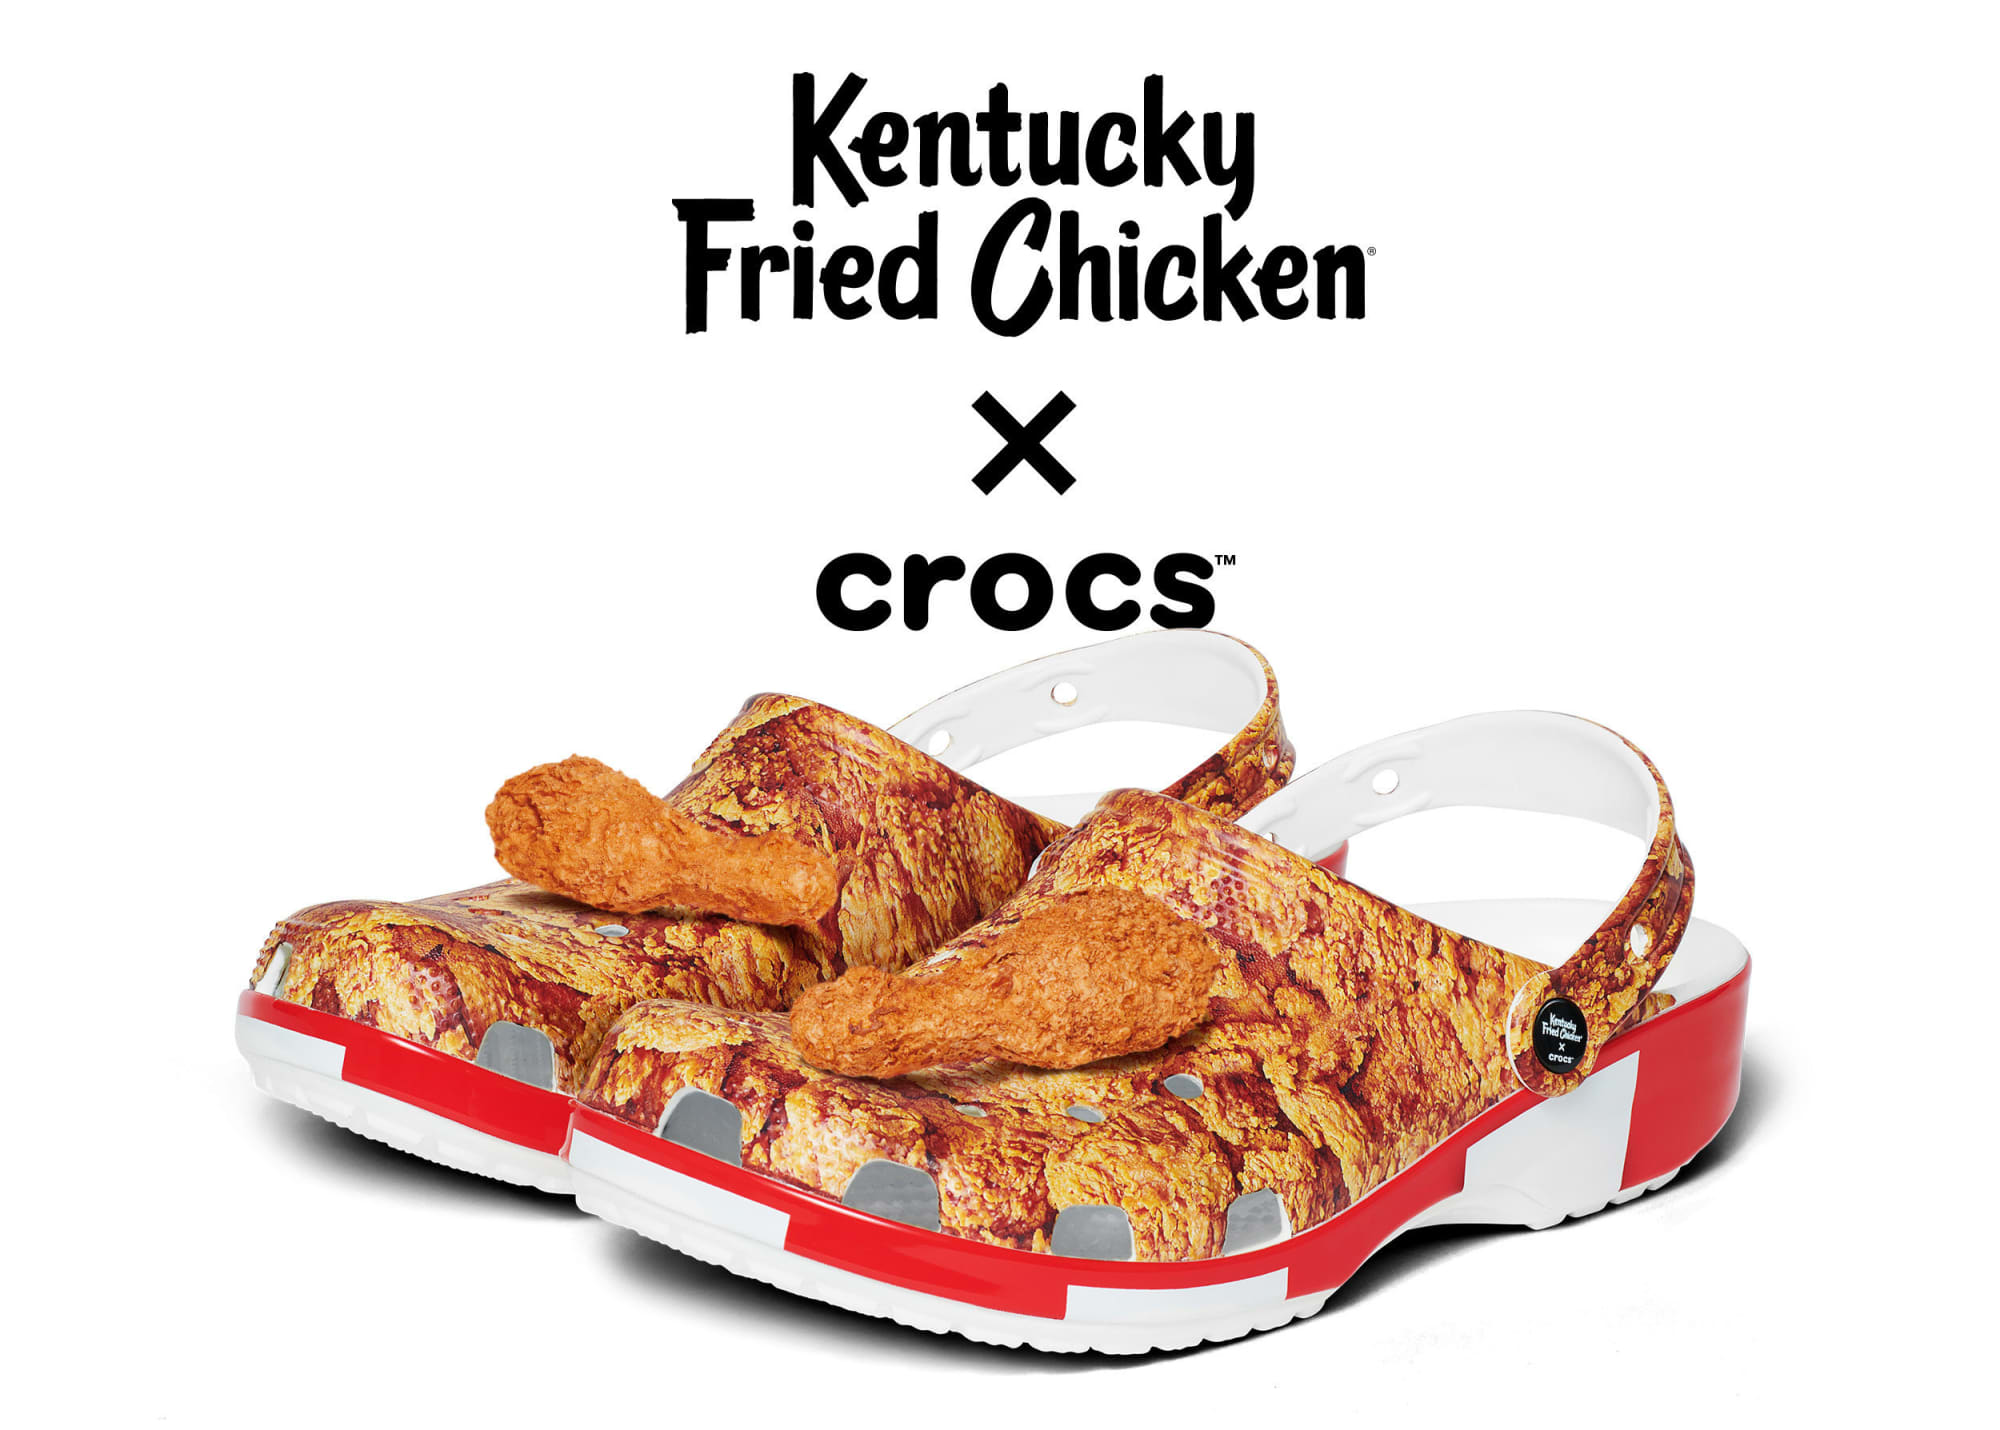 crocs with kfc